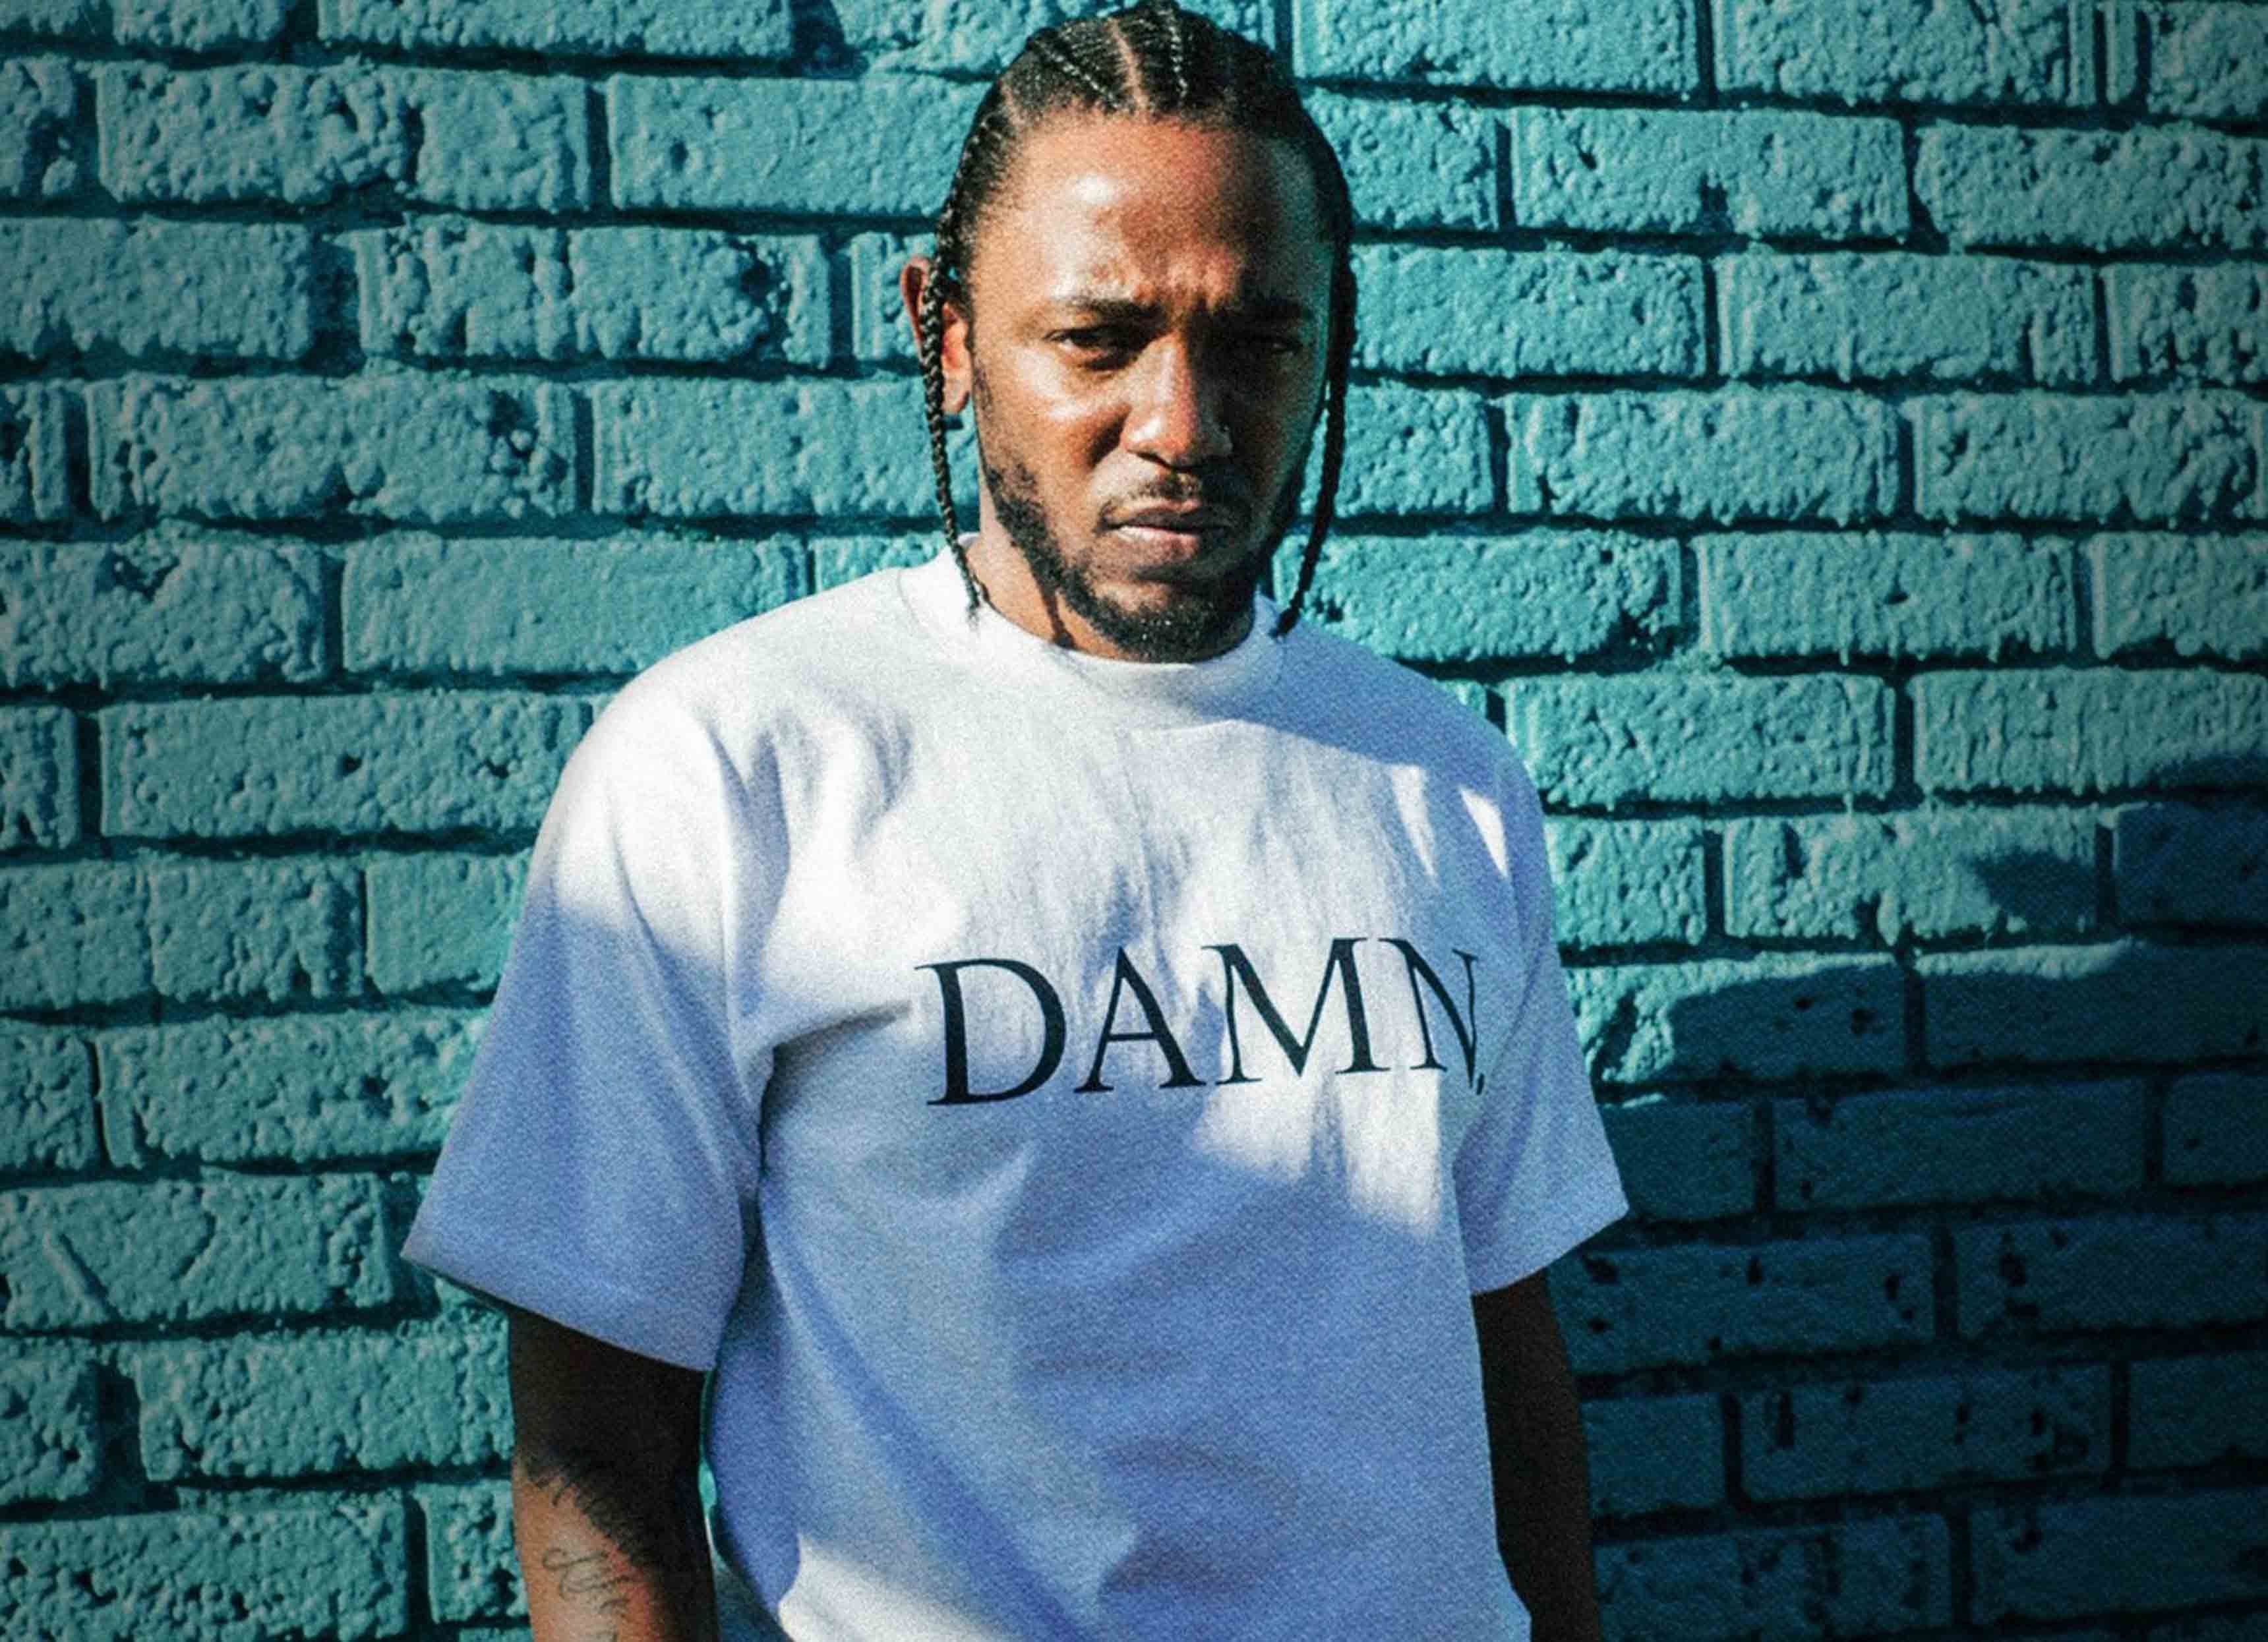 Kendrick lamar HD wallpapers